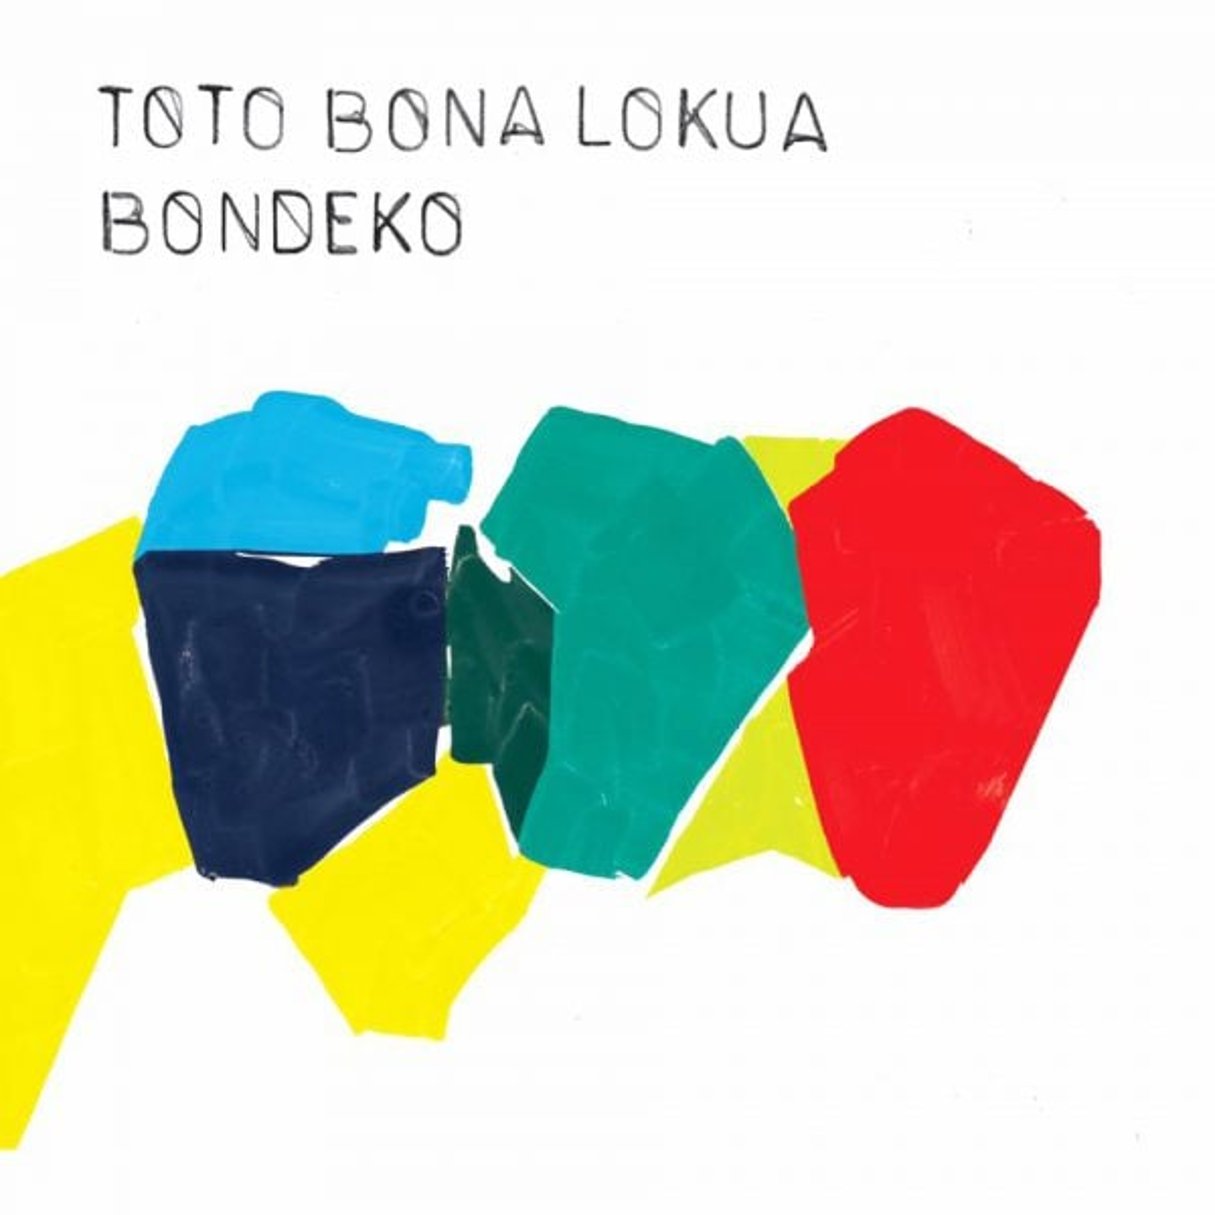 Bondeko, de Toto Bona Lokua, No Format!